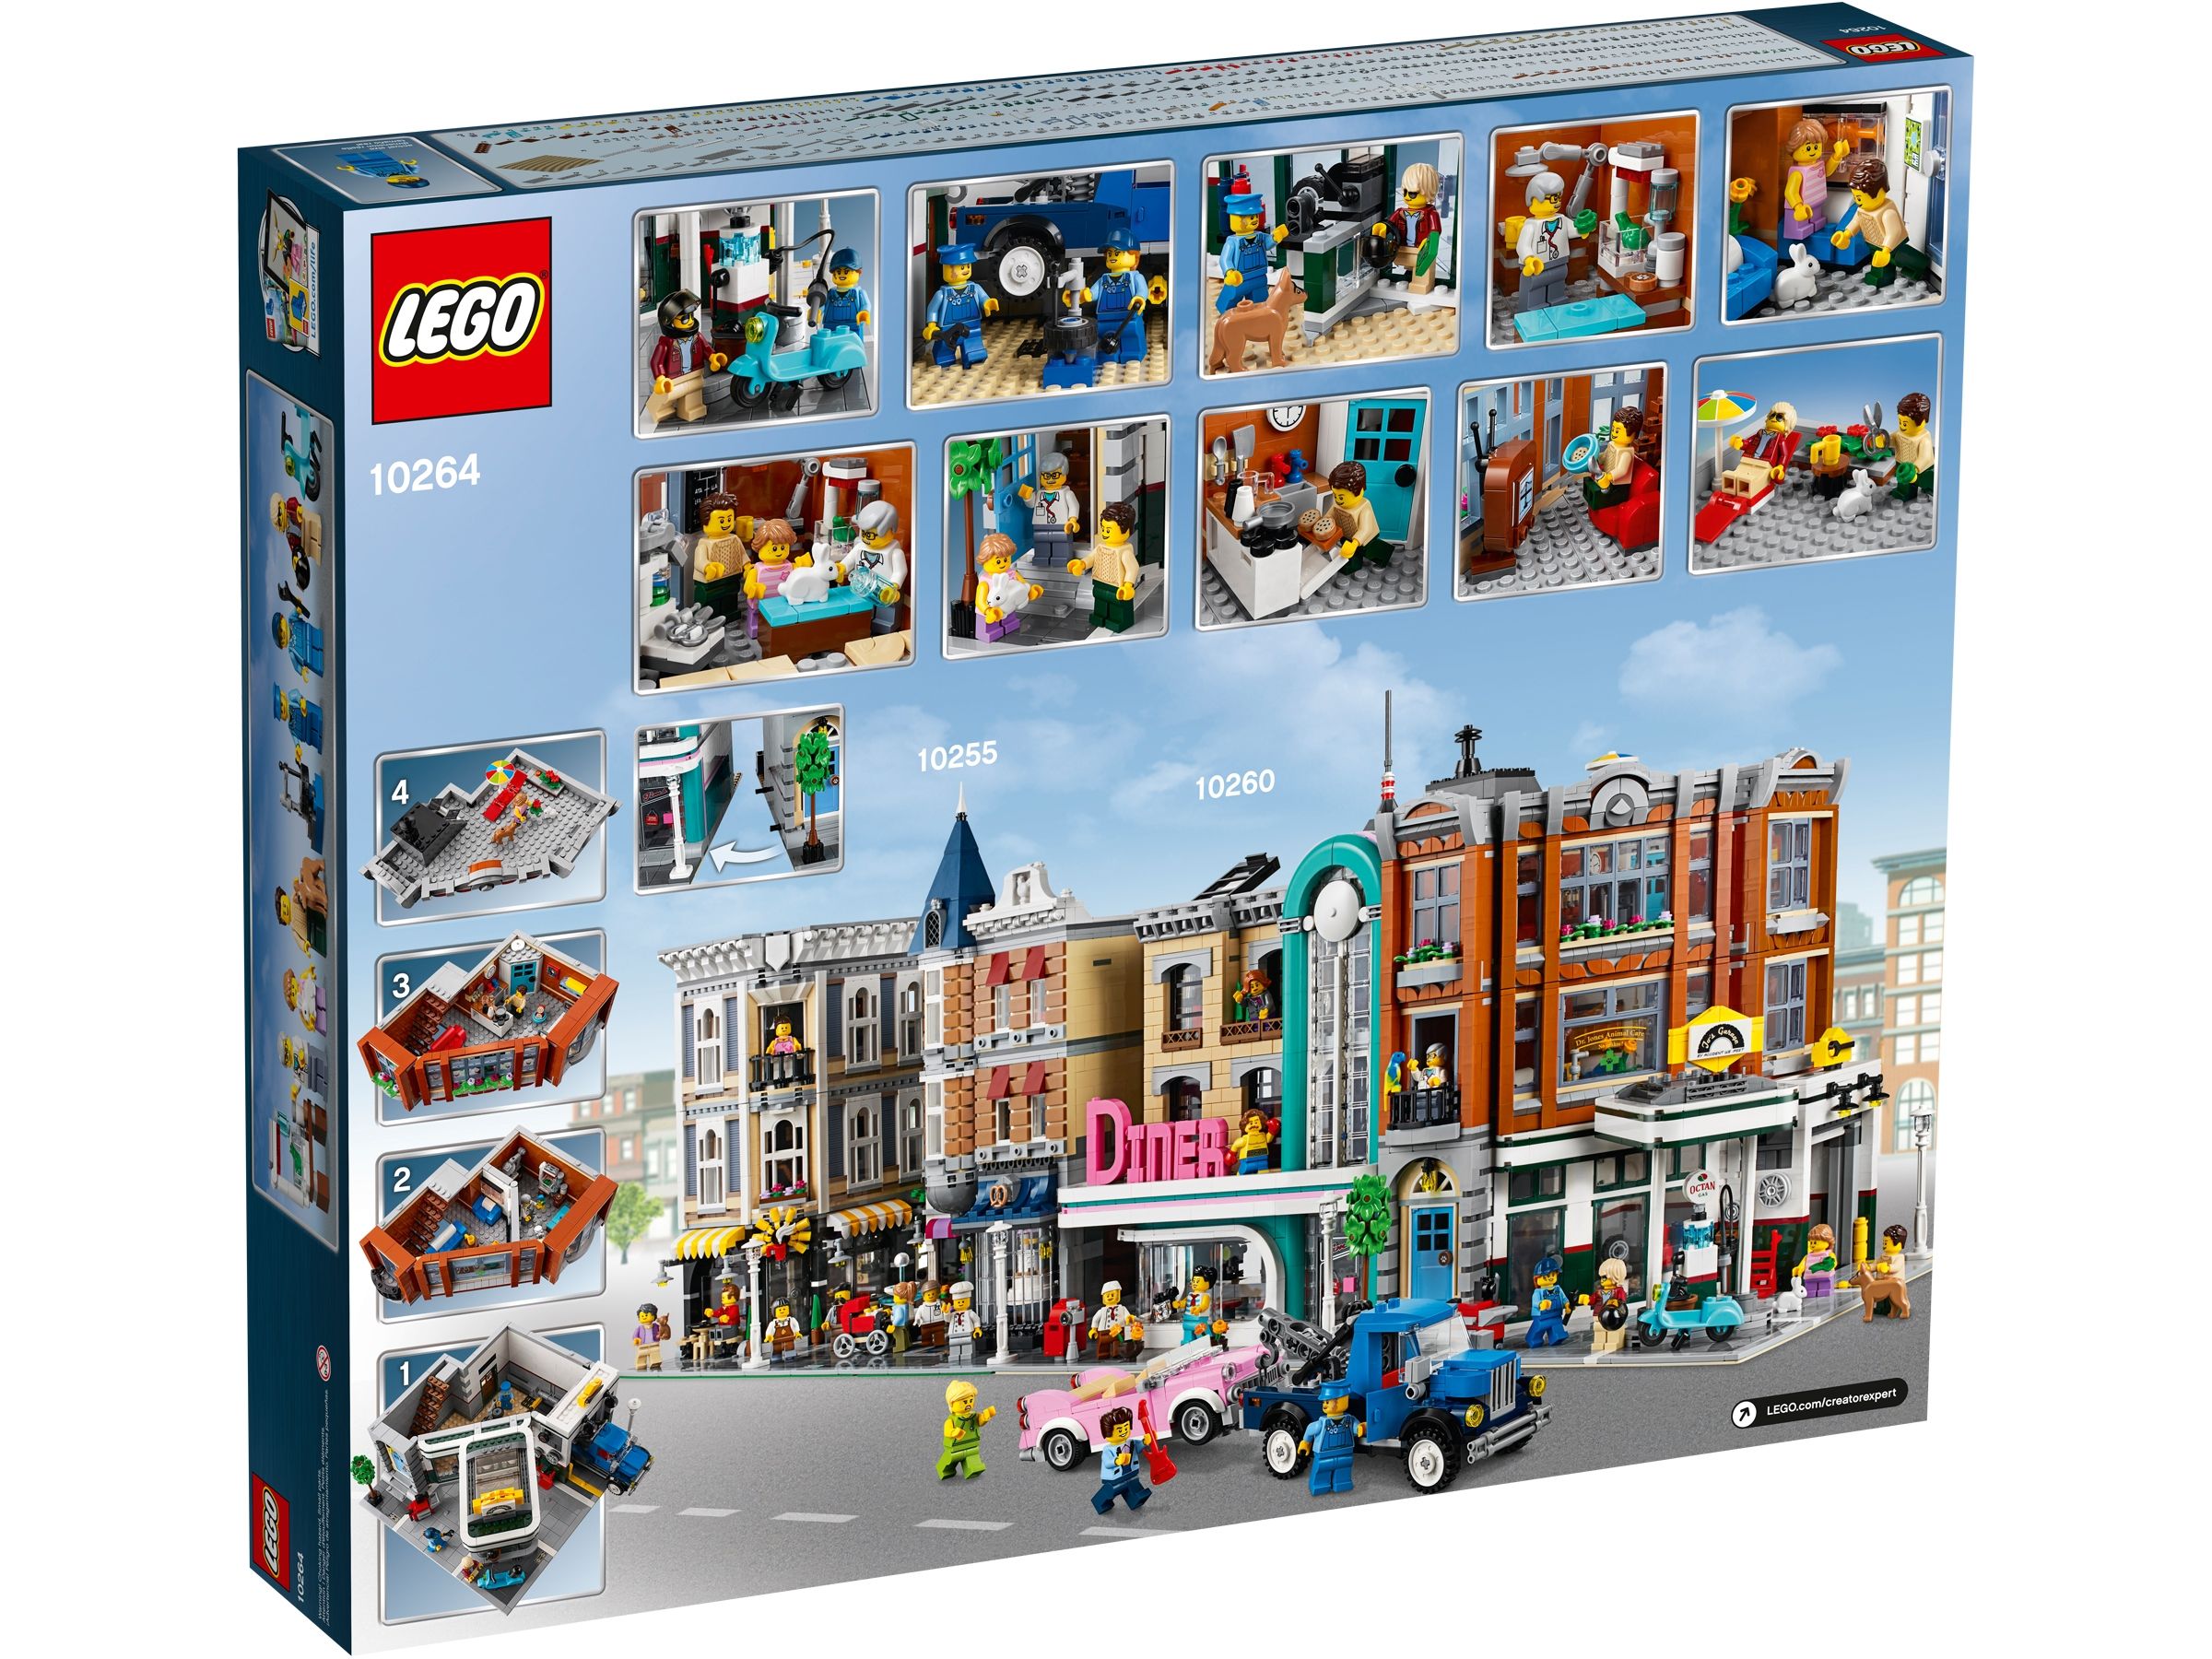 LEGO Advanced Models 10264 Eckgarage LEGO_10264_Box5_v39.jpg